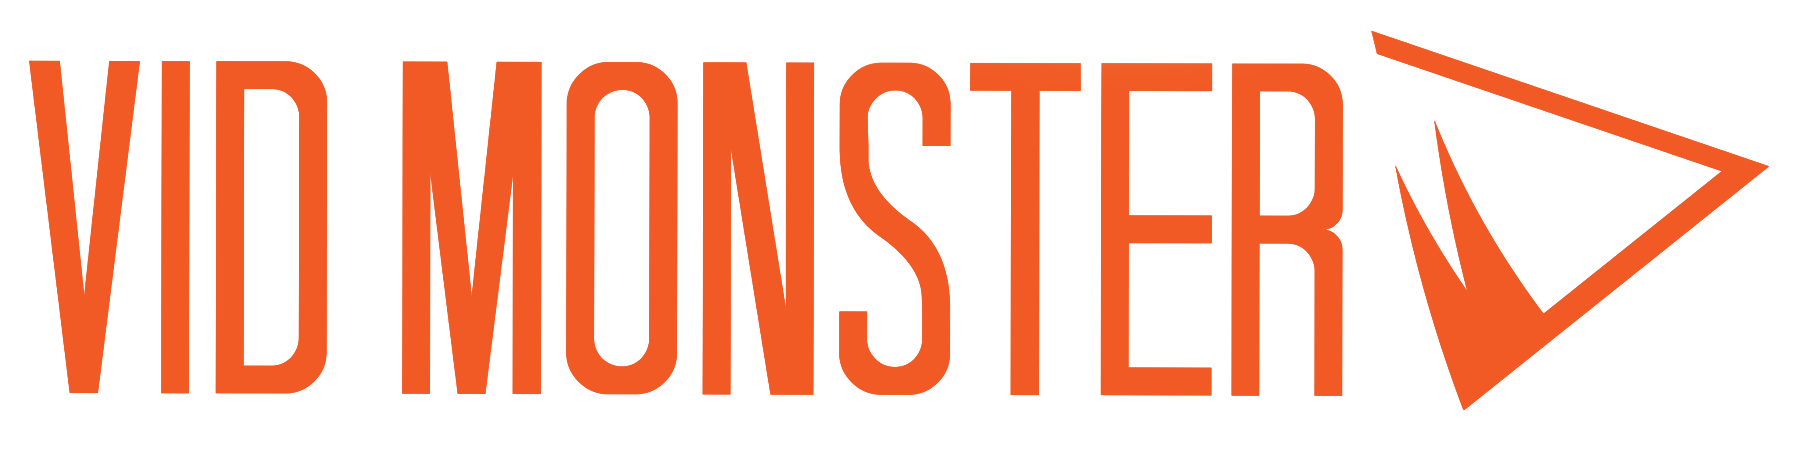 Vid Monster logo